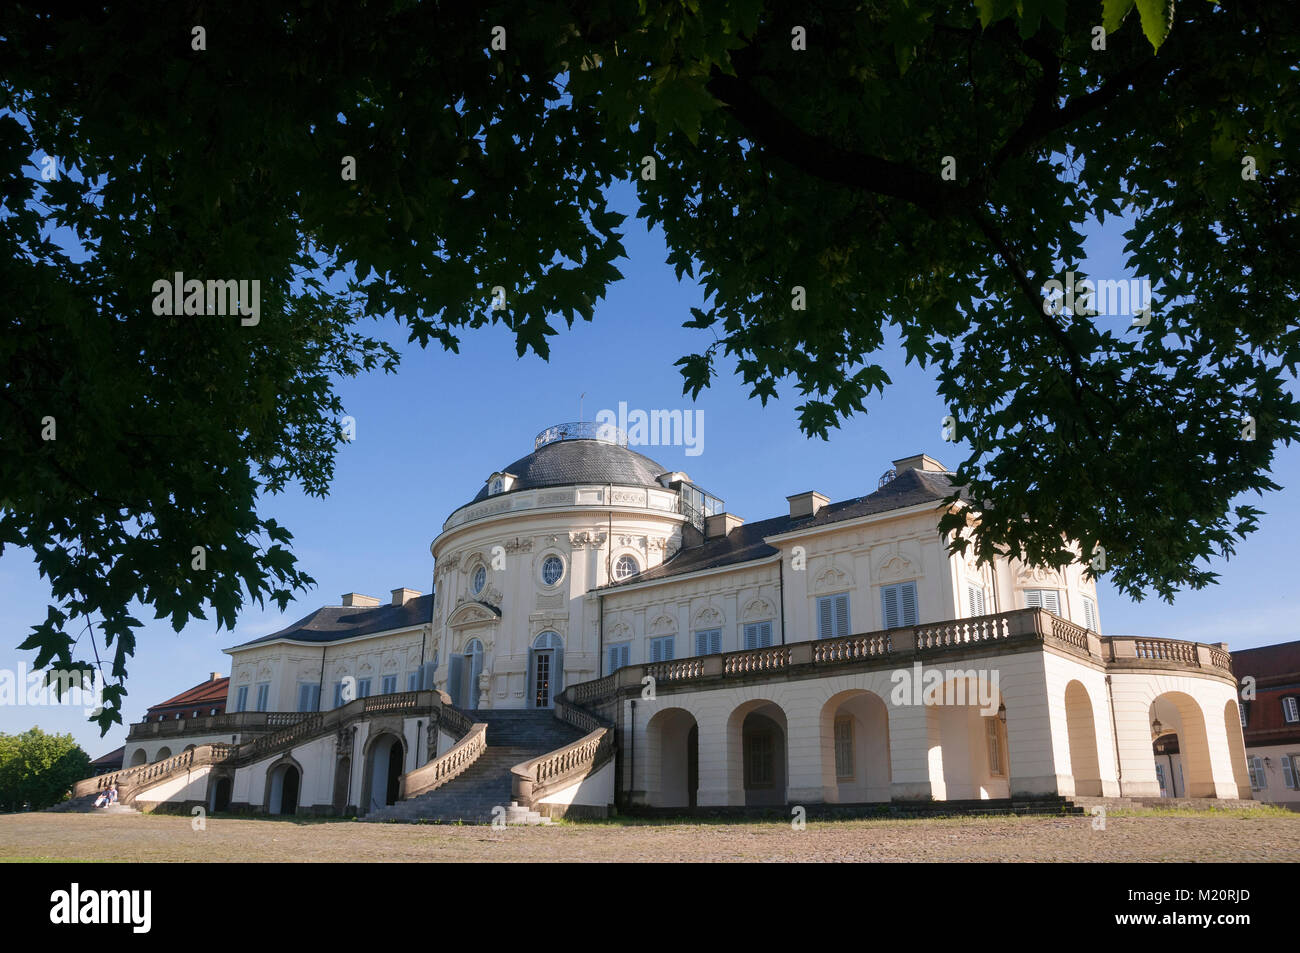 Schloss Solitude, Stuttgart, Deutschland, Europa, Bade-Wurtemberg Banque D'Images